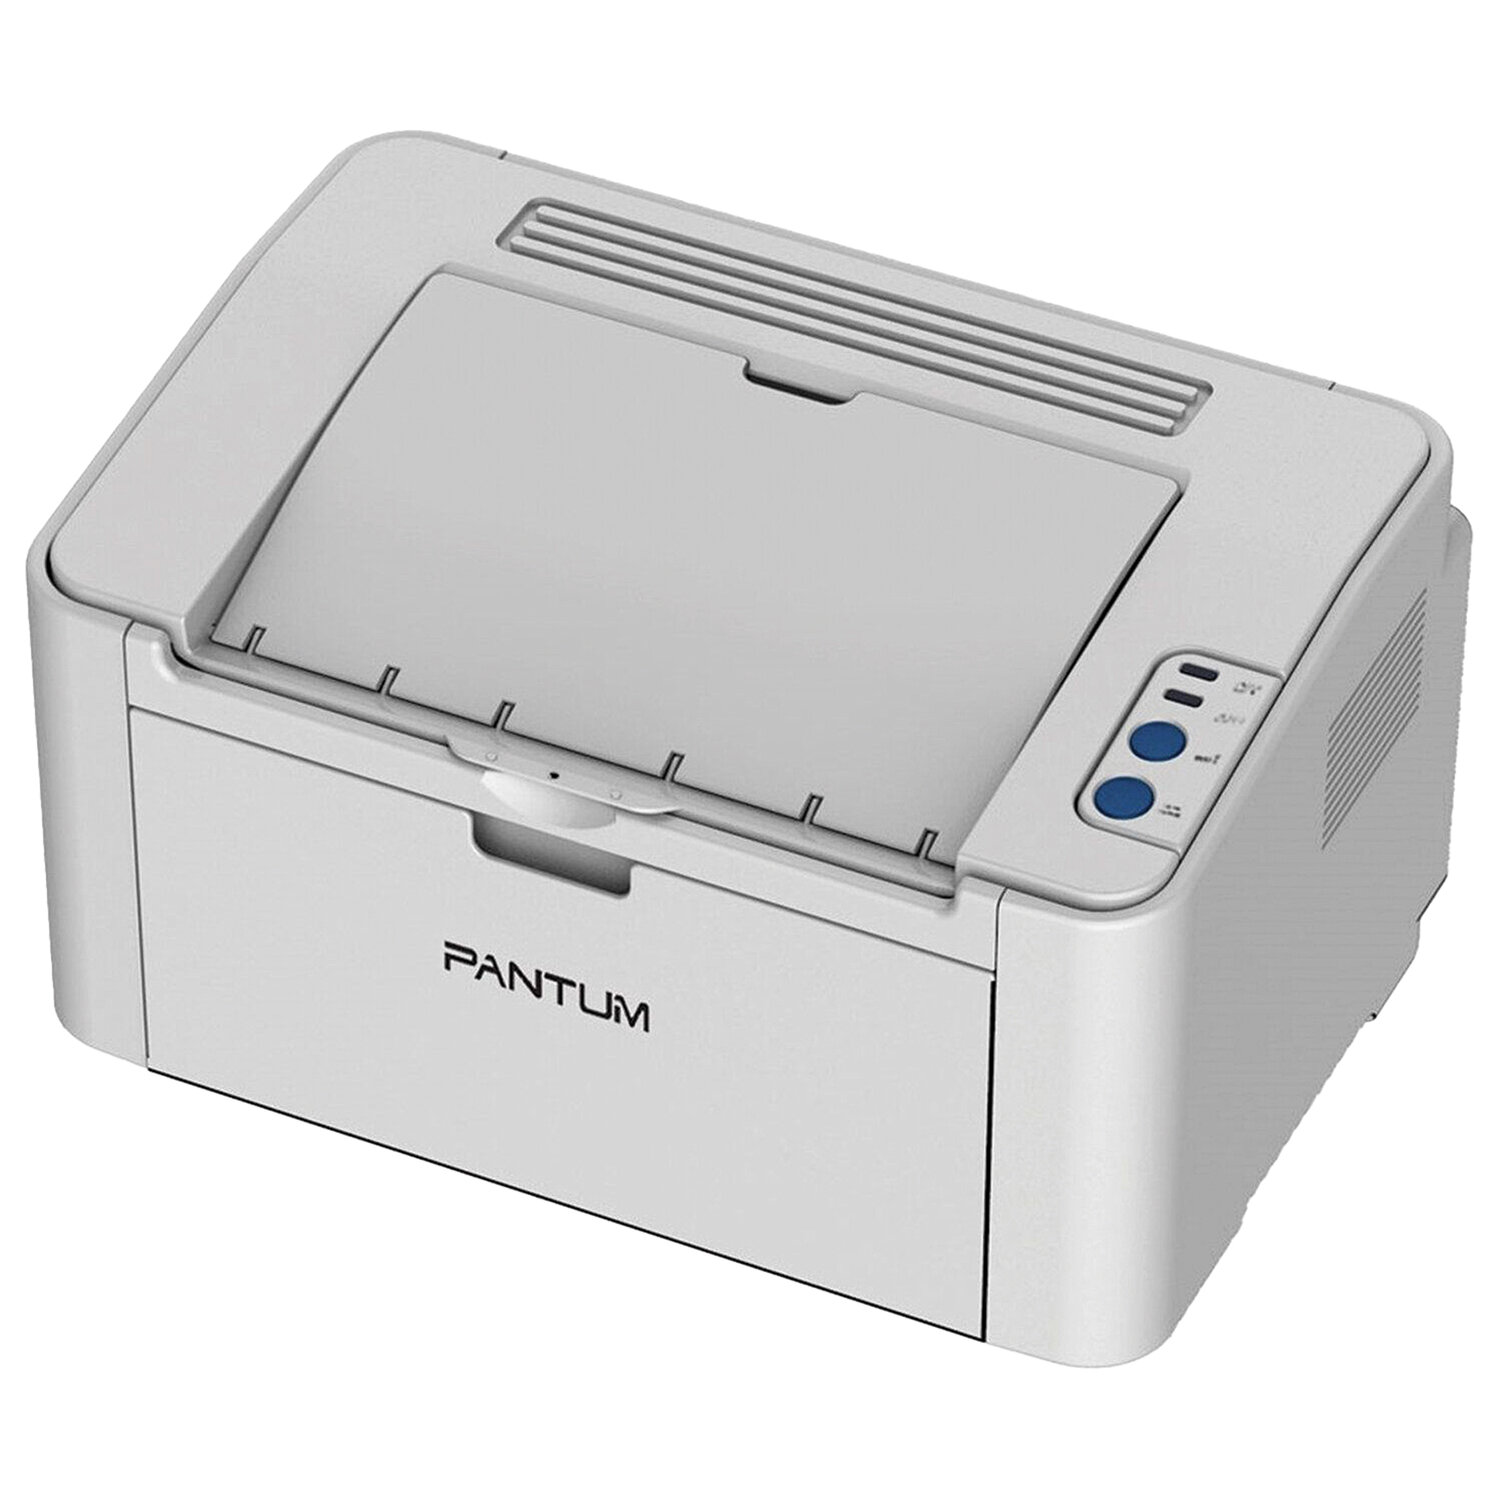 P2200 series драйвер. Принтер Pantum p2200. Принтер лазерный Pantum p2200. Принтер лазерный Pantum p2518. Принтер Pantum 2200.